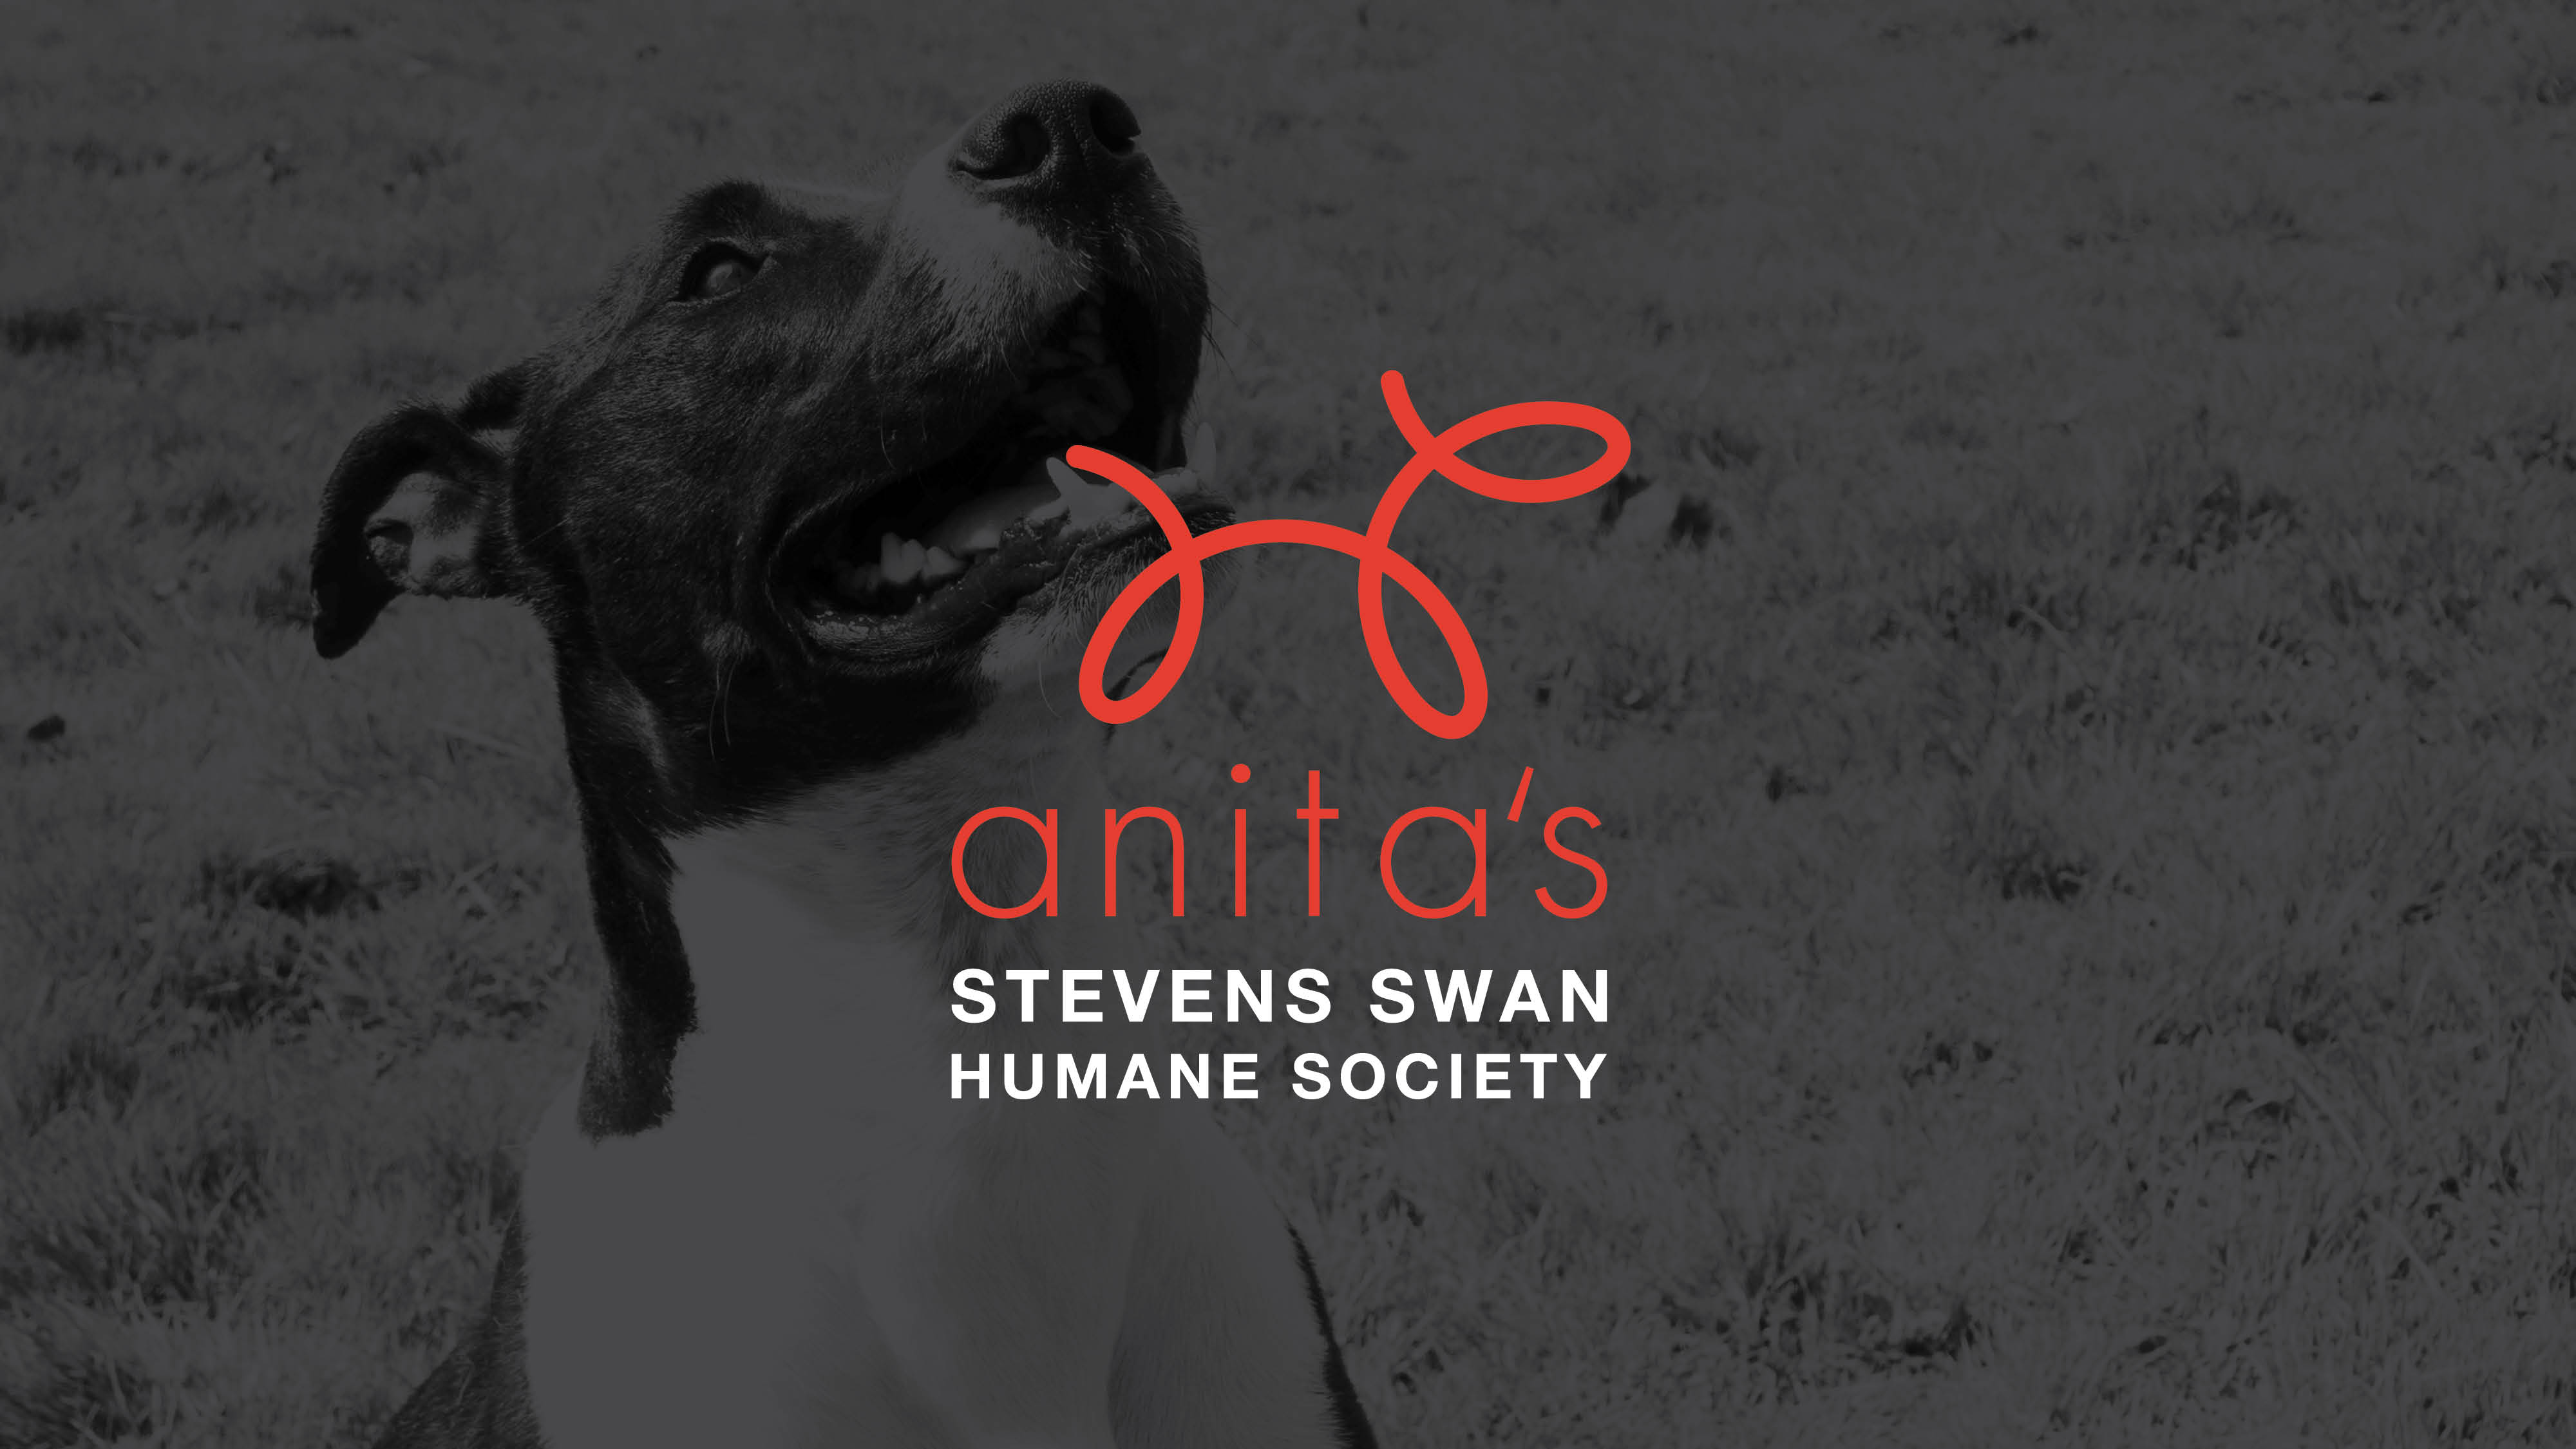 Anita's Stevens Swan Humane Society